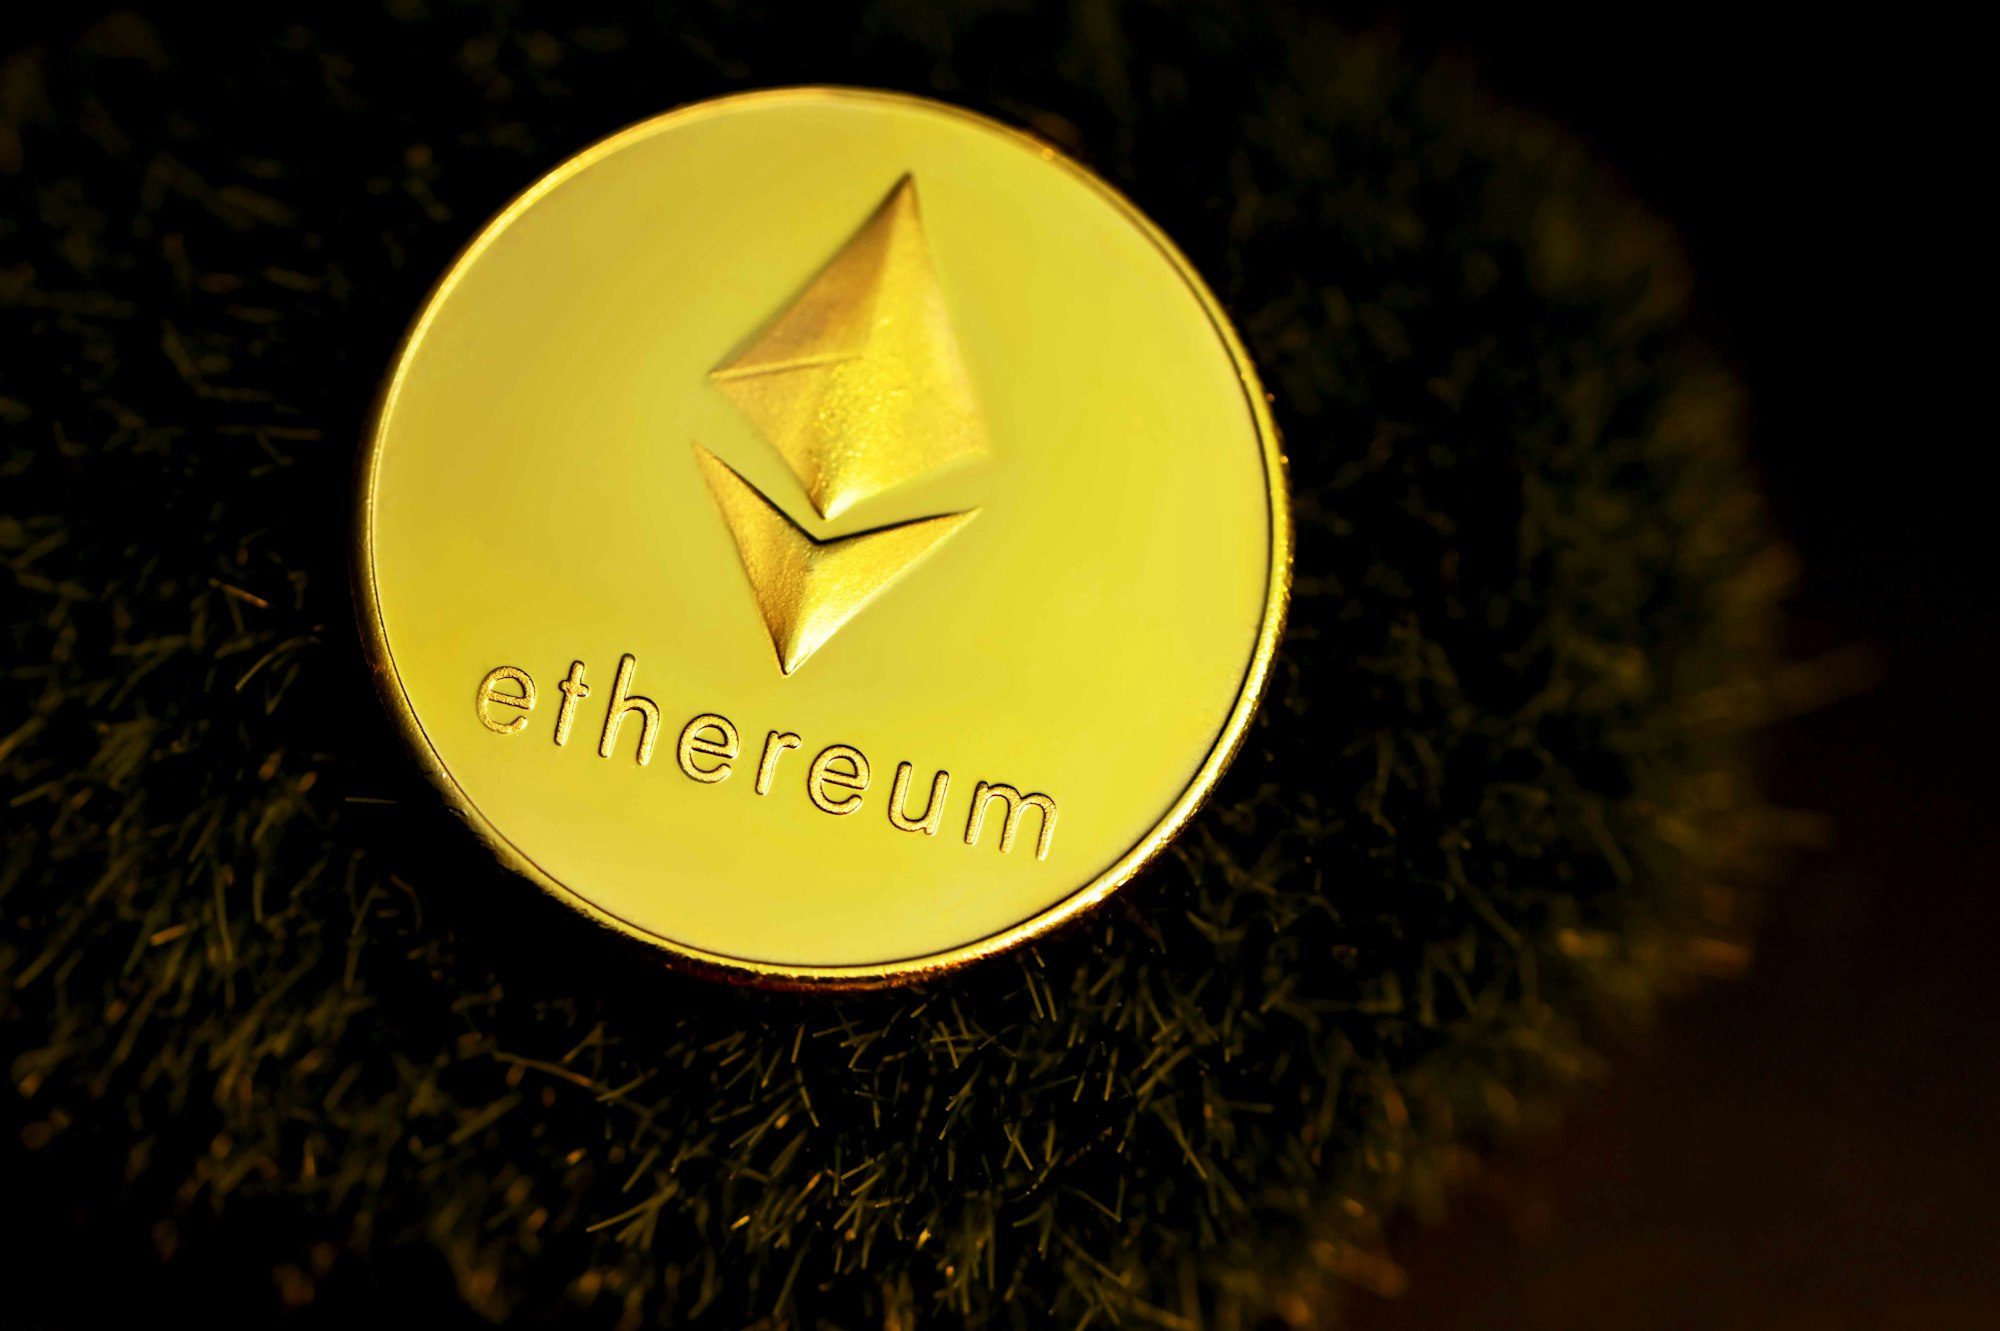 An Ethereum coin on a grass patch